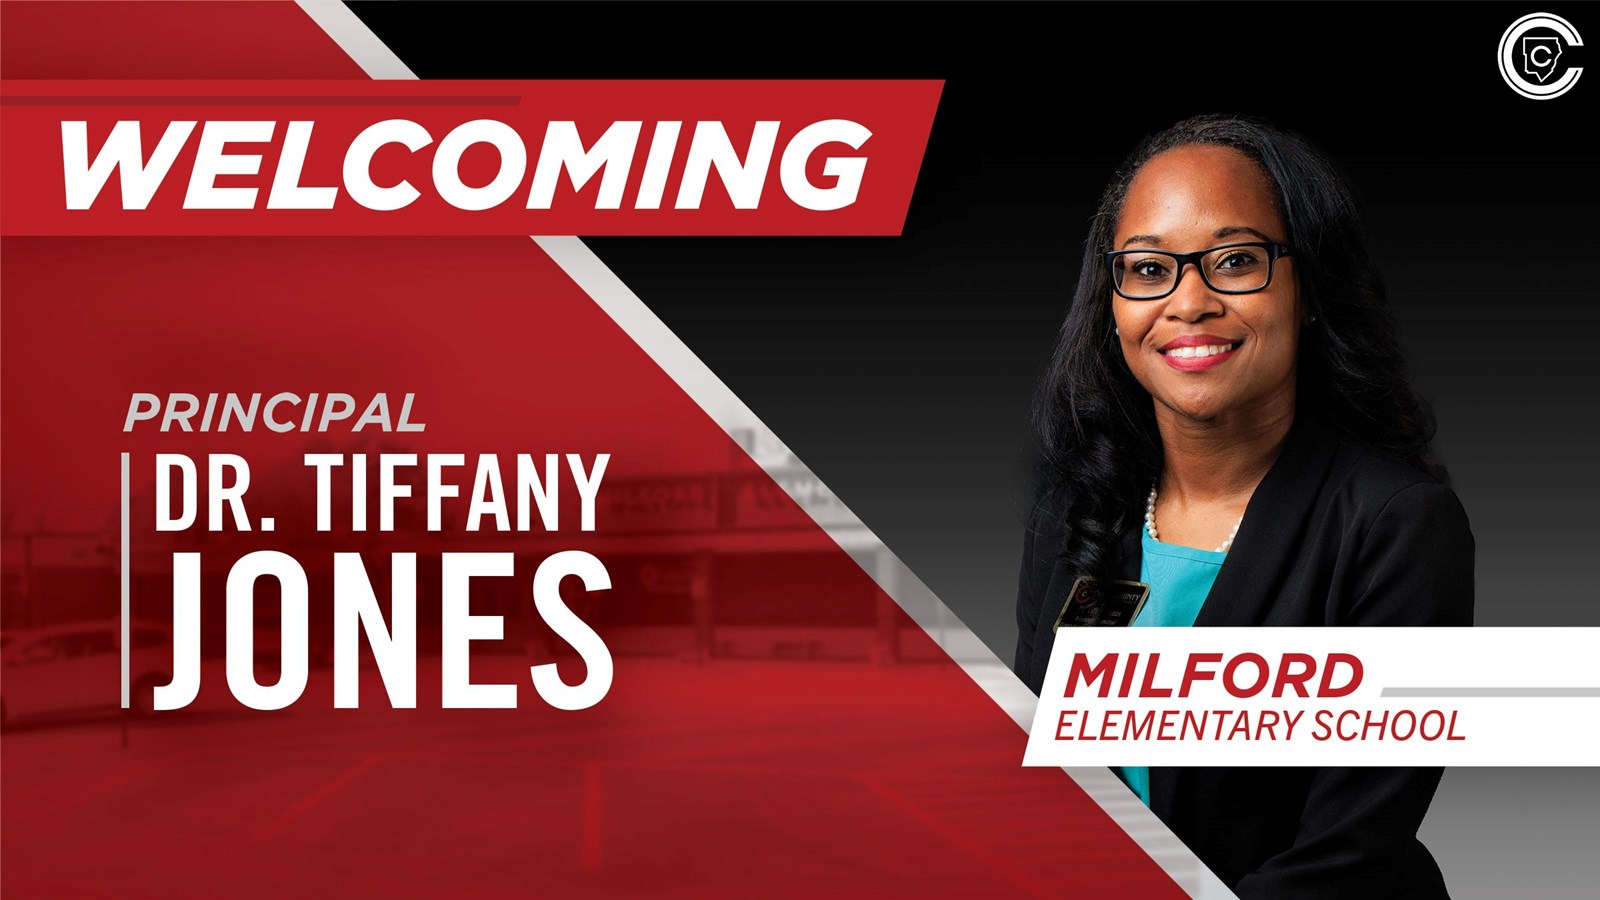 Dr. Tiffany Jones is the new principal of Milford Elementary School.